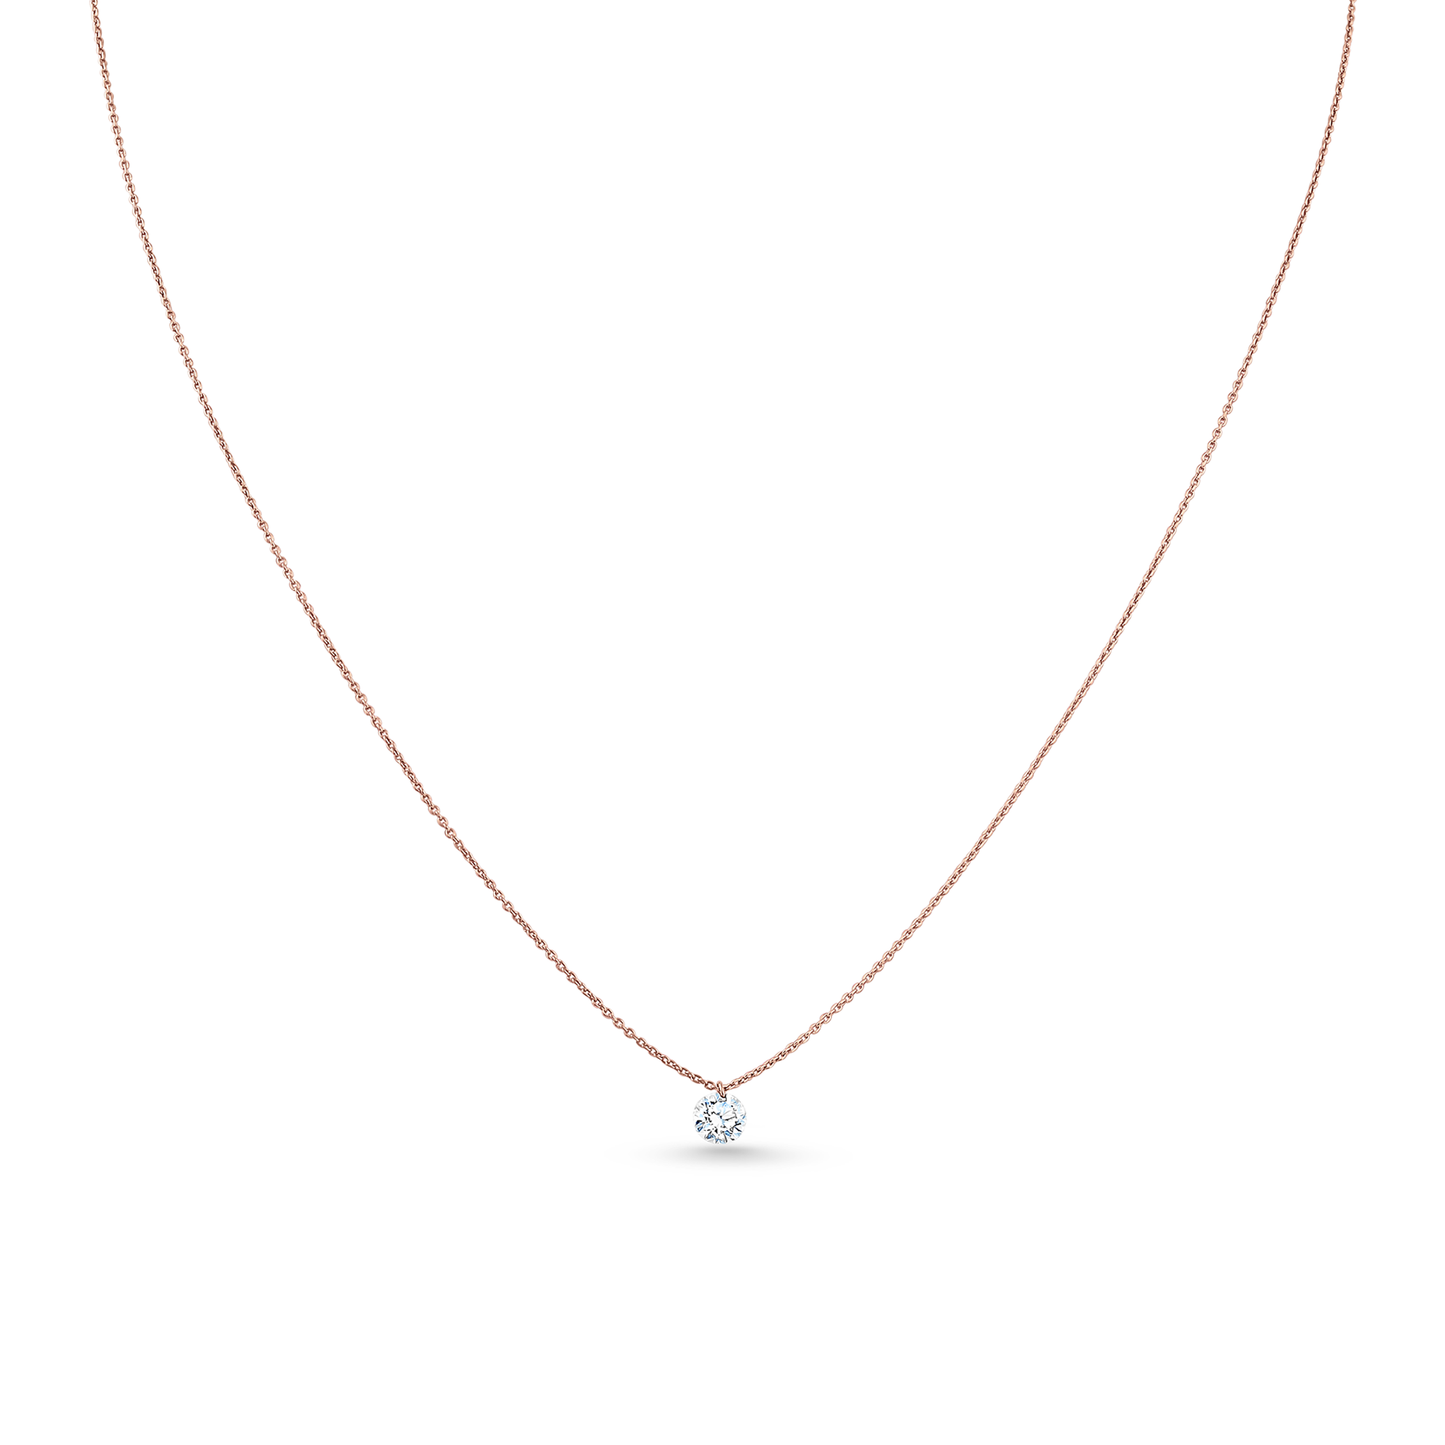 Oliver Heemeyer Mark the Moment diamond pendant 0.30 ct. made of 18k rose gold.